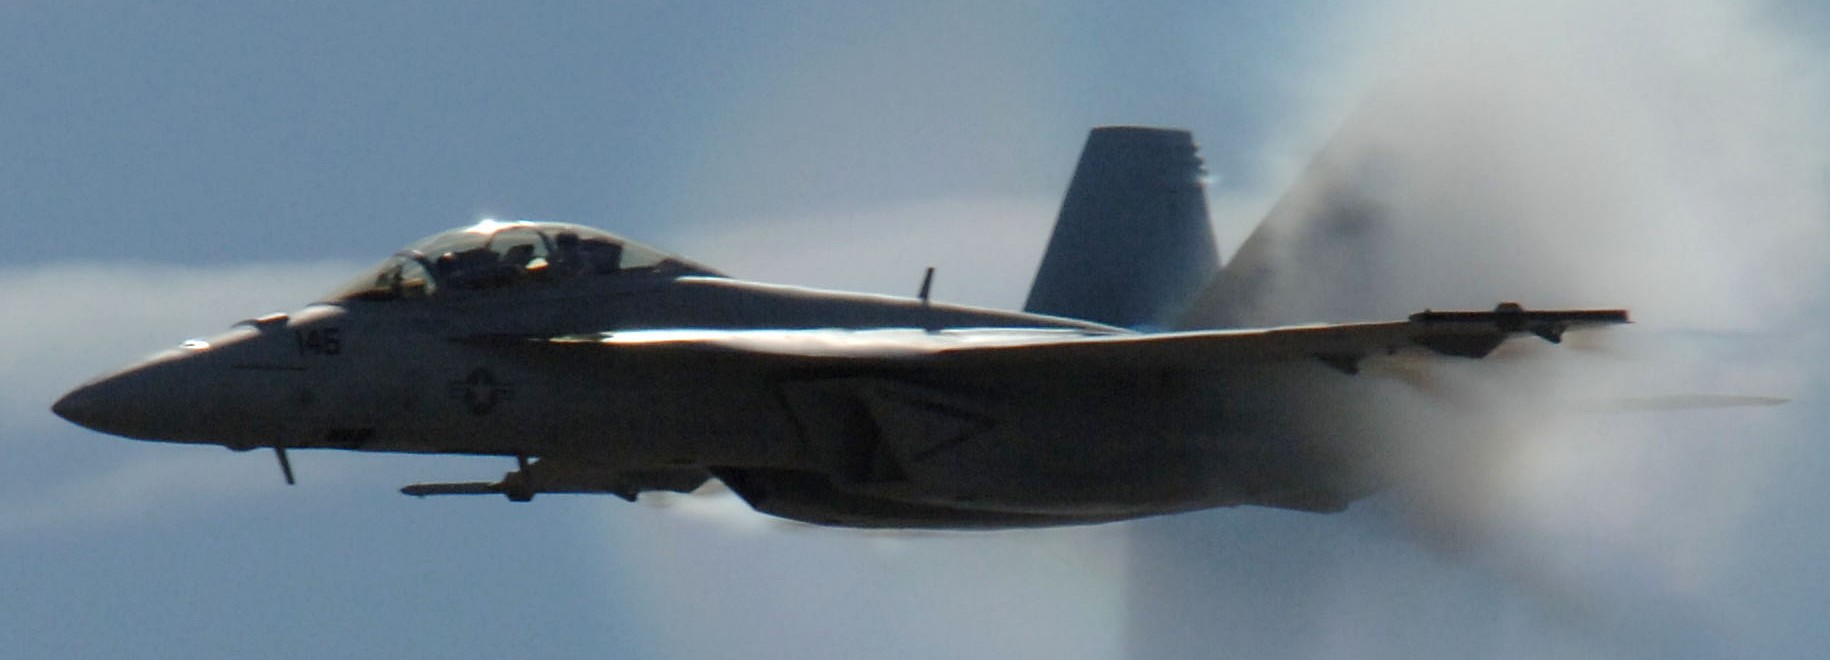 vfa-122 flying eagles strike fighter squadron f/a-18f super hornet 2006 32 nas miramar